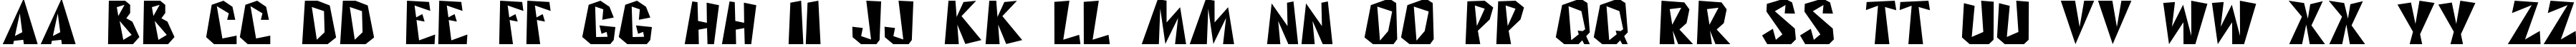 Пример написания английского алфавита шрифтом Rublik